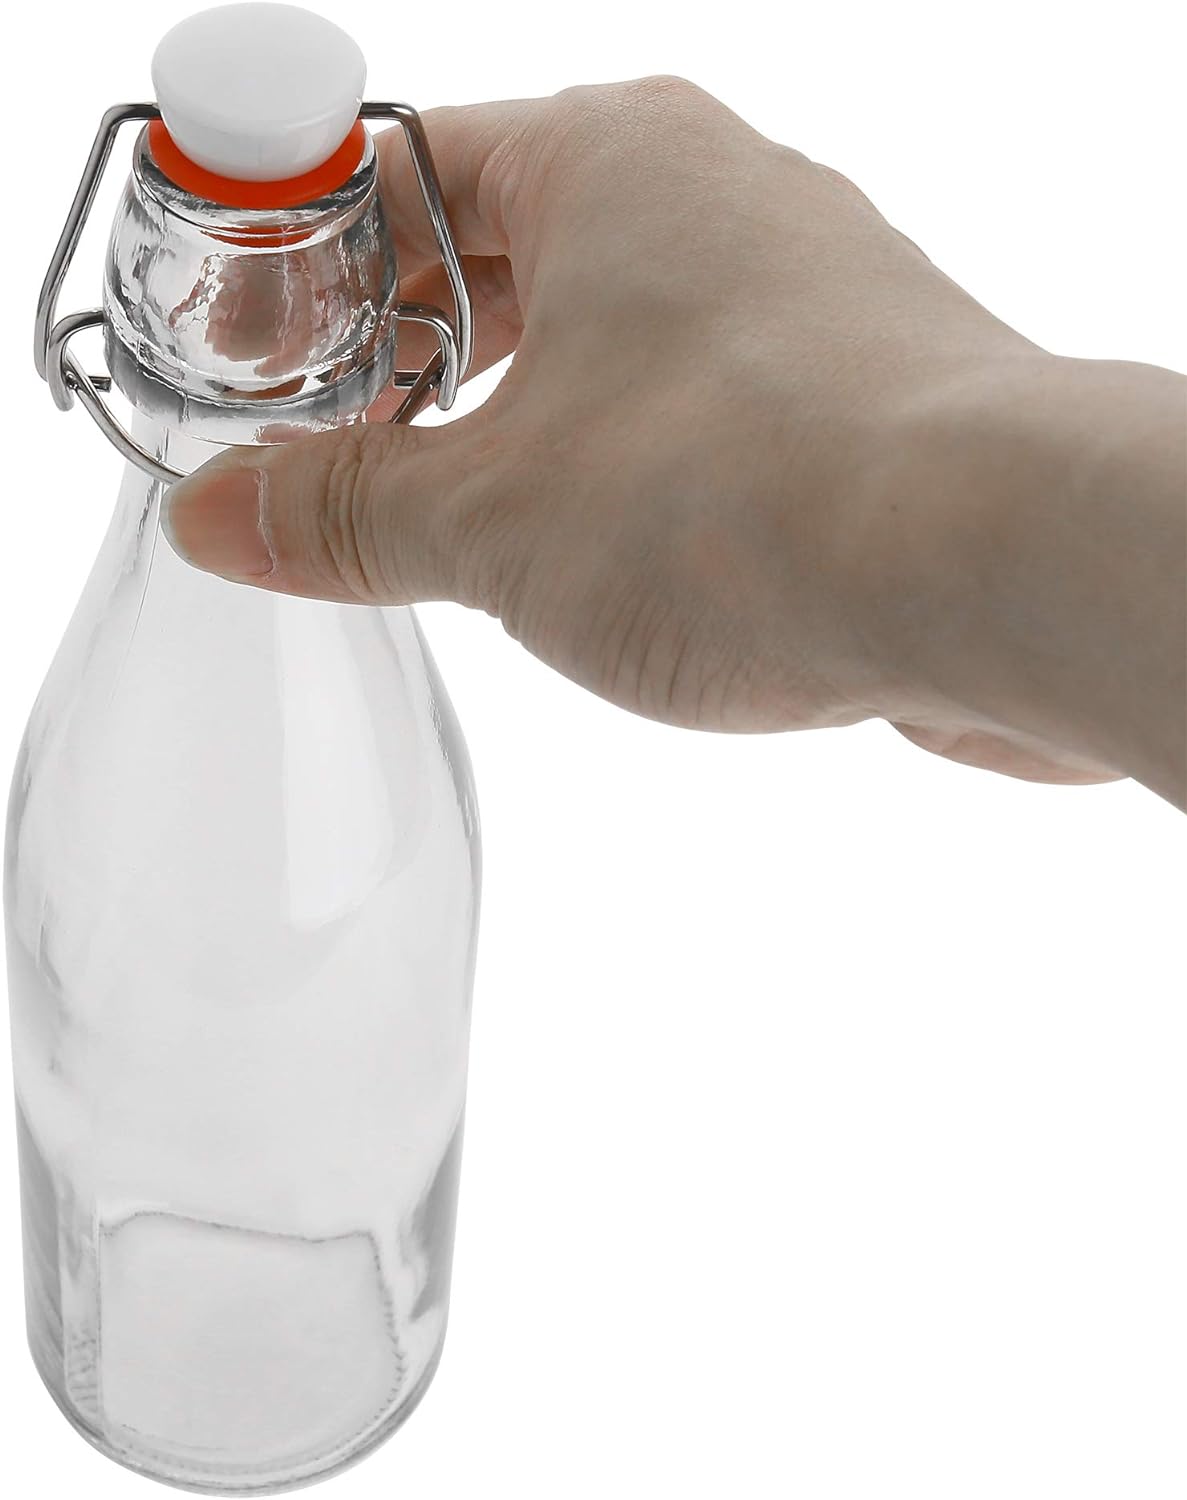 Flip Top Glass Bottle [1 Liter / 33 fl. oz.] [Pack of 6] – Swing Brewing with Stopper for Beverages, Oil, Vinegar, Kombucha, Beer, Water, Soda, Kefir Airtight Lid & Leak Proof Cap Clear